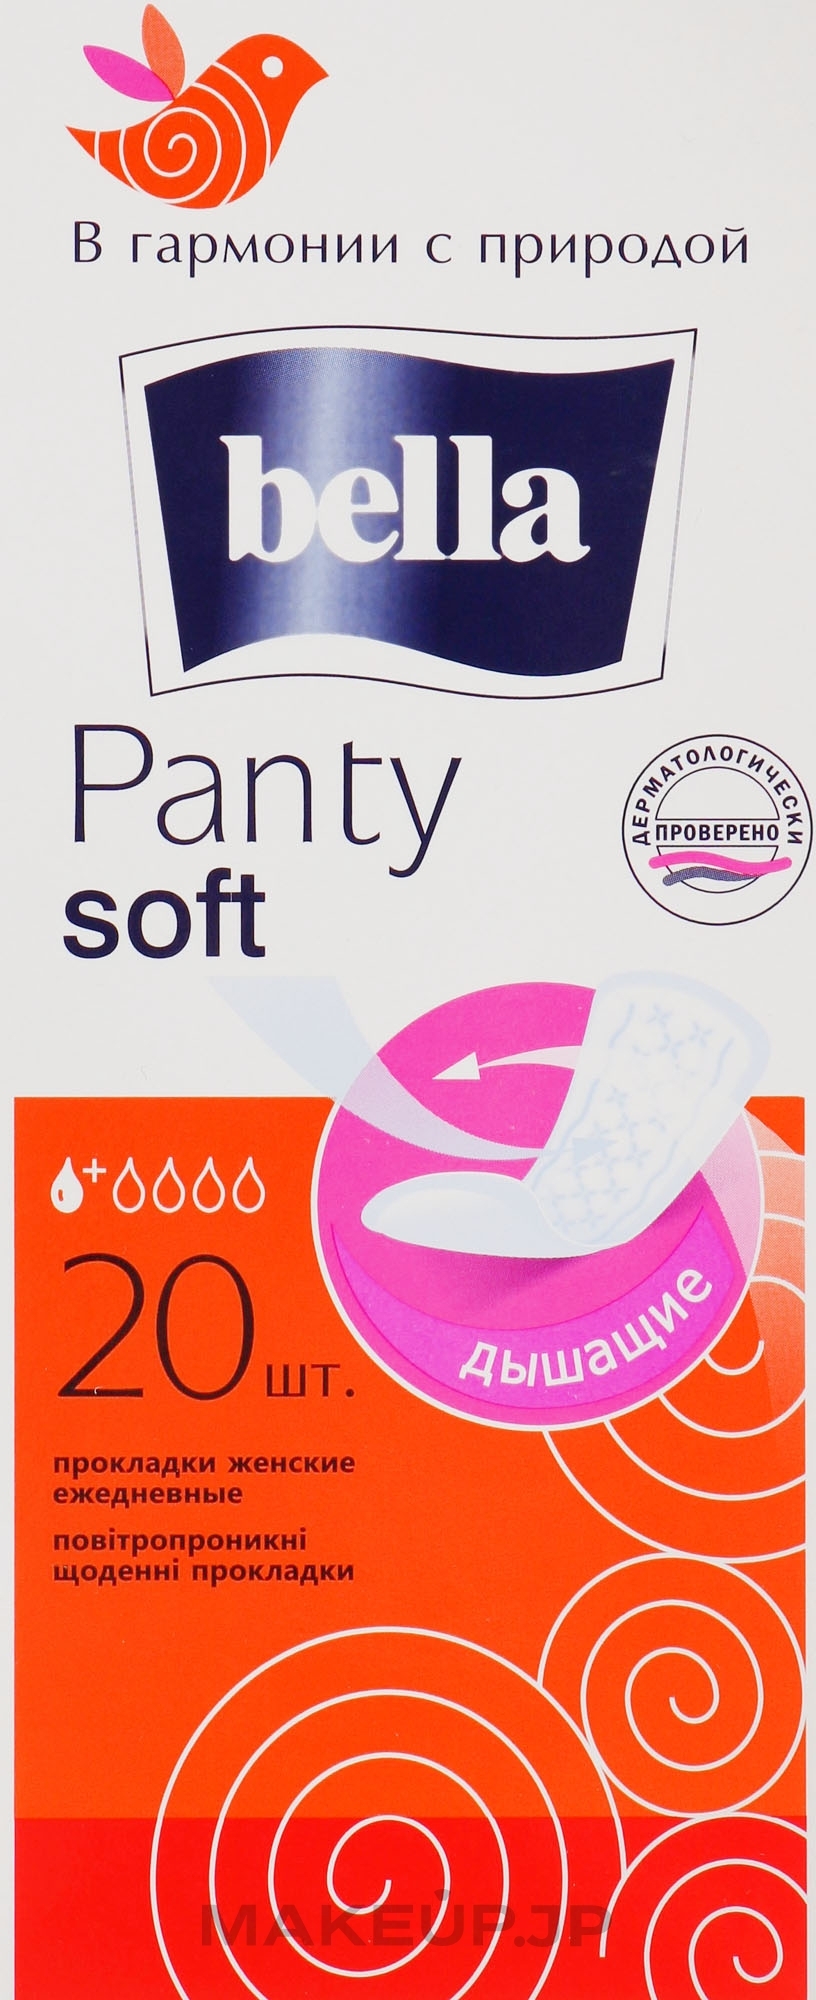 Pantiliners Panty Soft, 20 pcs - Bella — photo 20 szt.